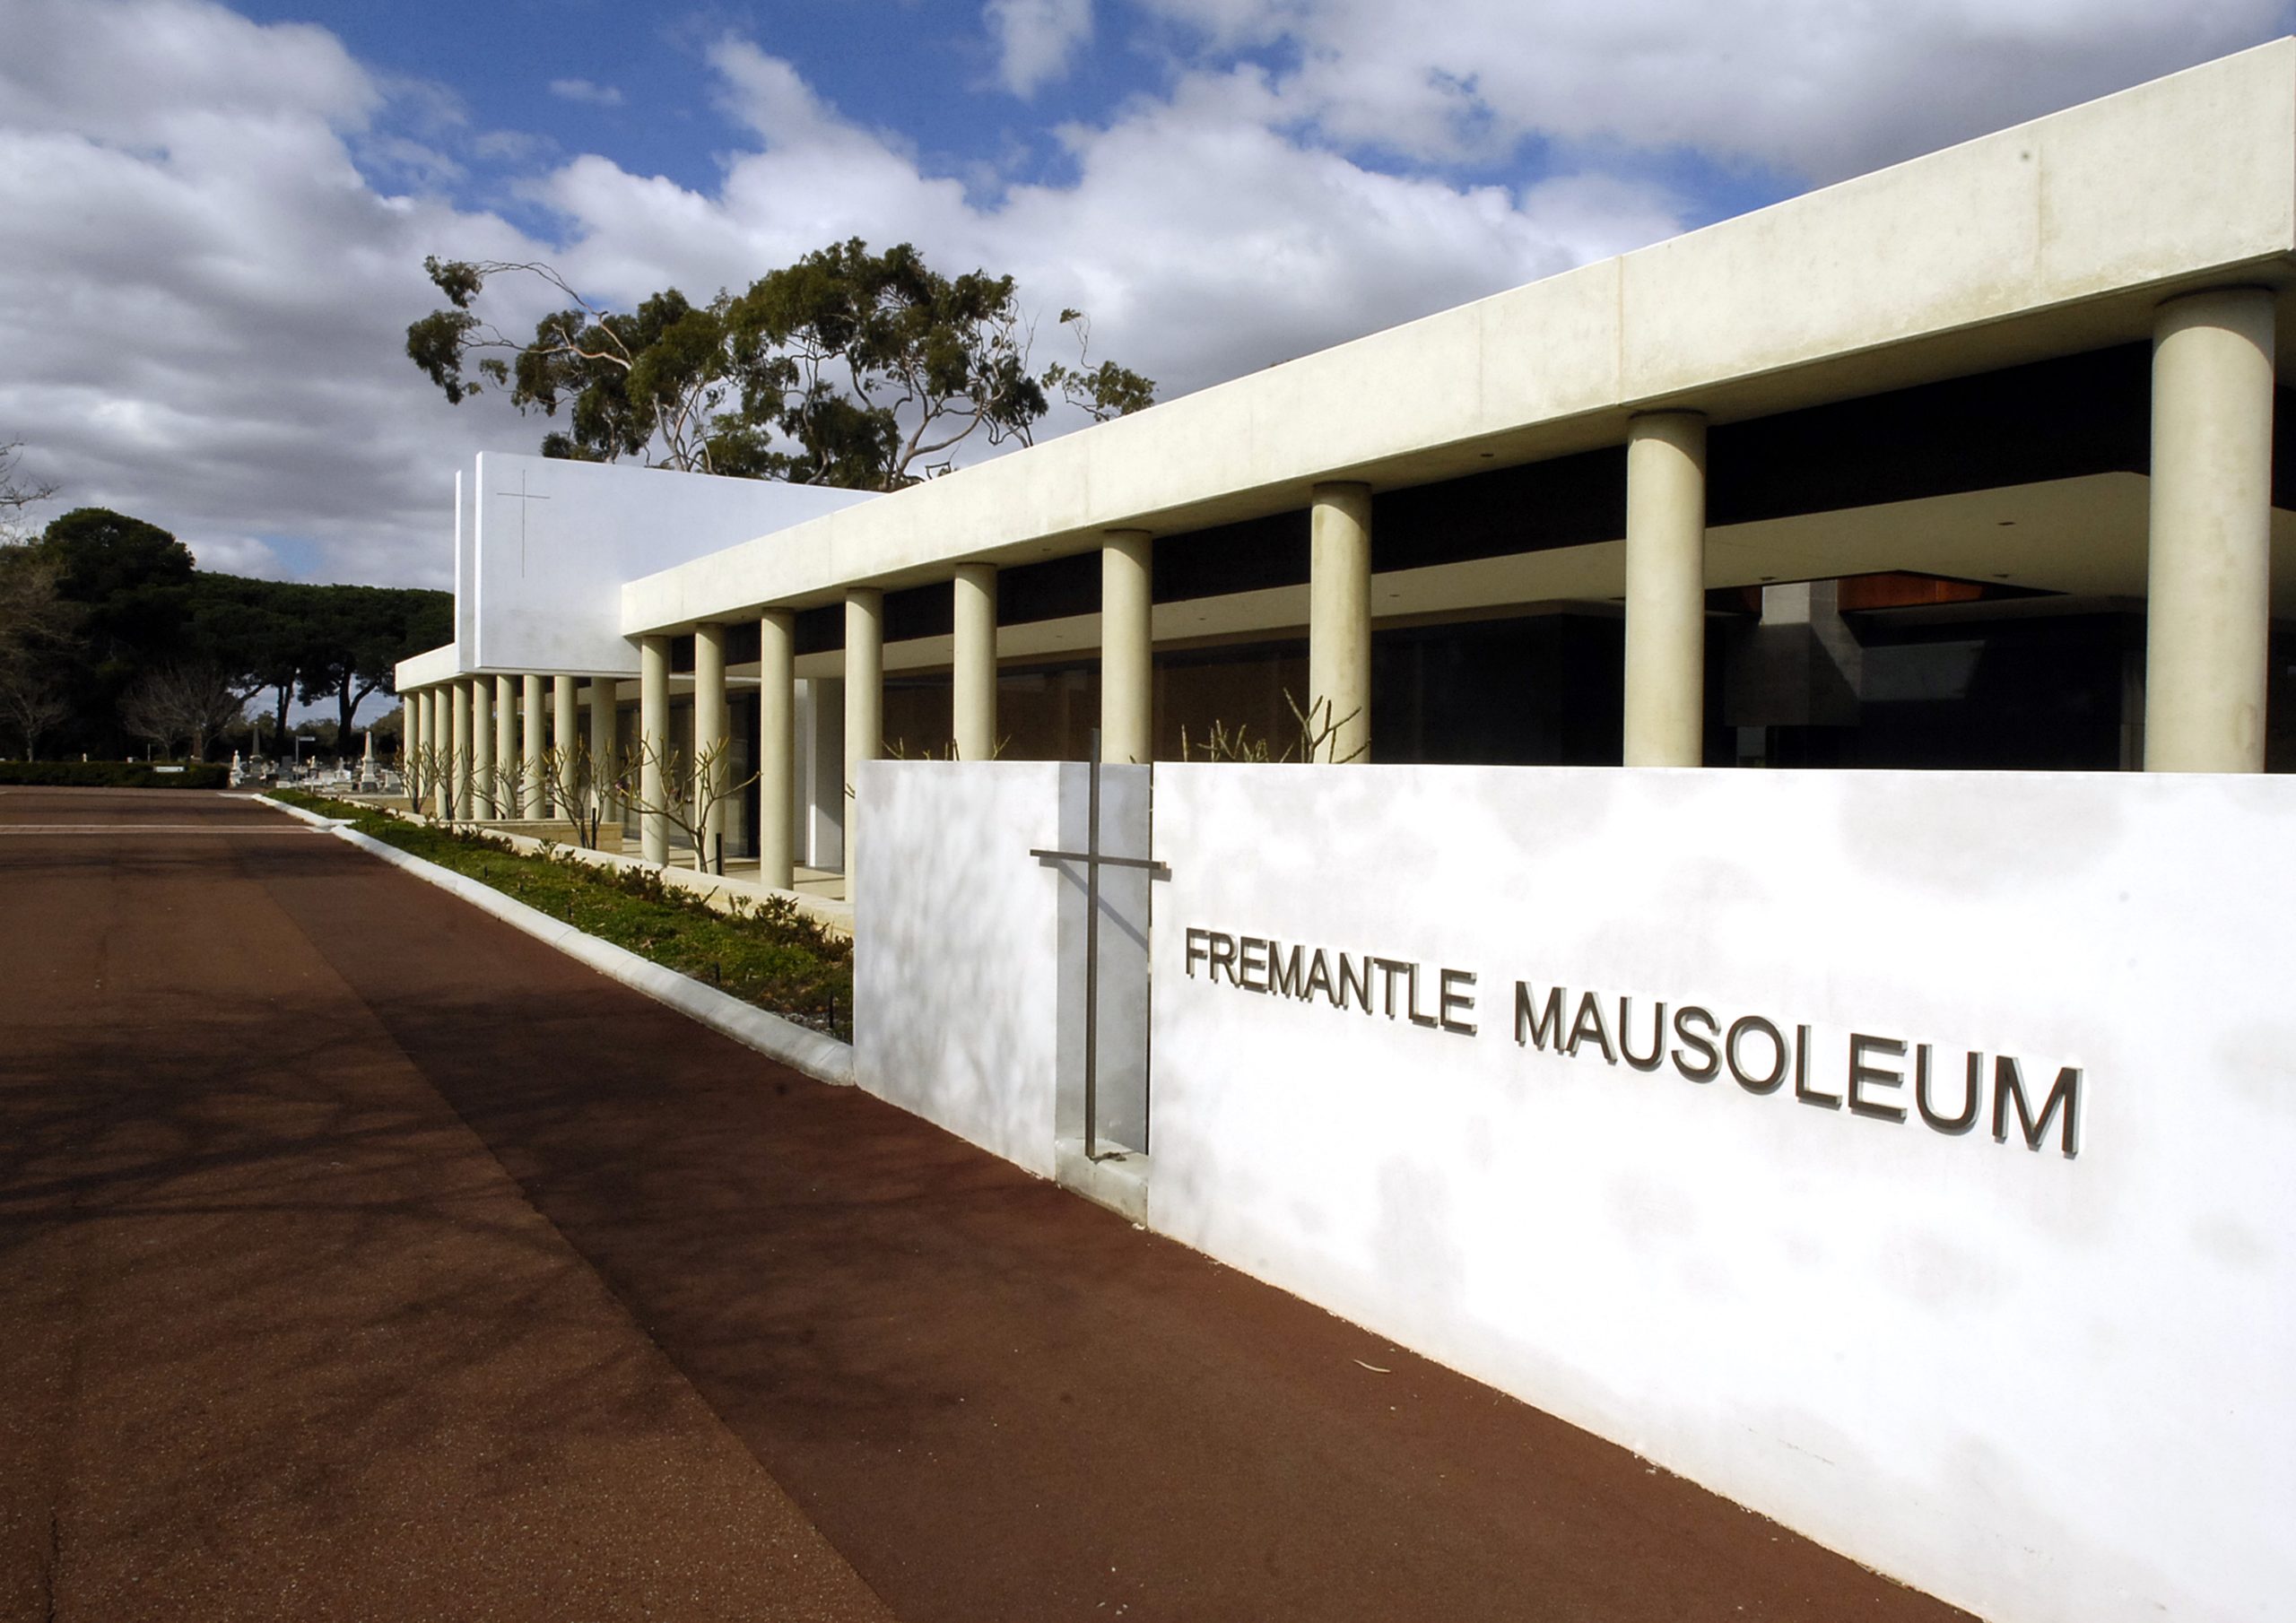 Fremantle Mausoleum external